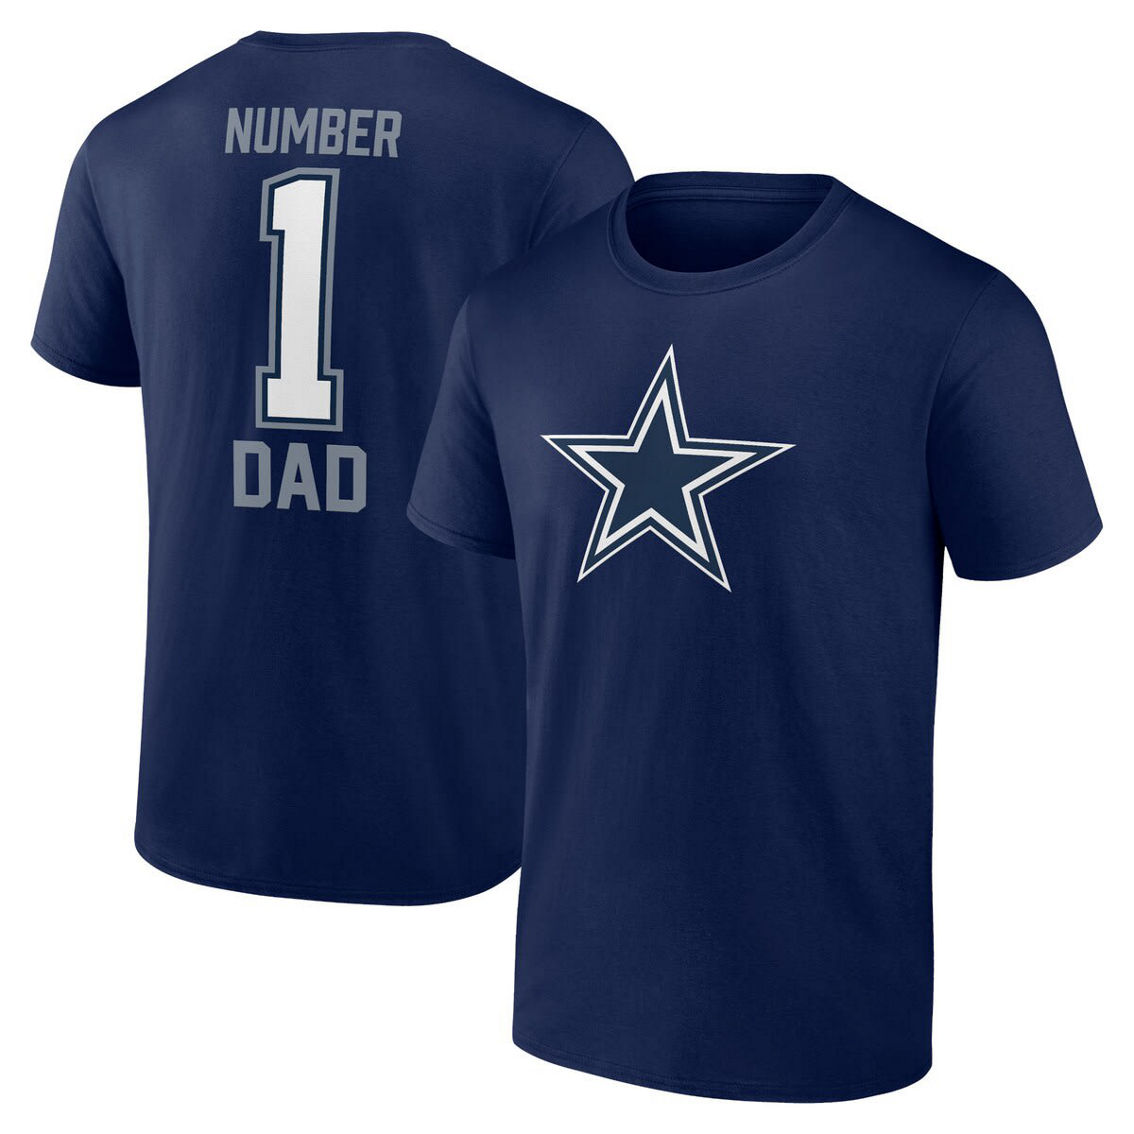 Fanatics Men's Fanatics Navy Dallas Cowboys Father's Day #1 Dad T-Shirt - Image 2 of 4